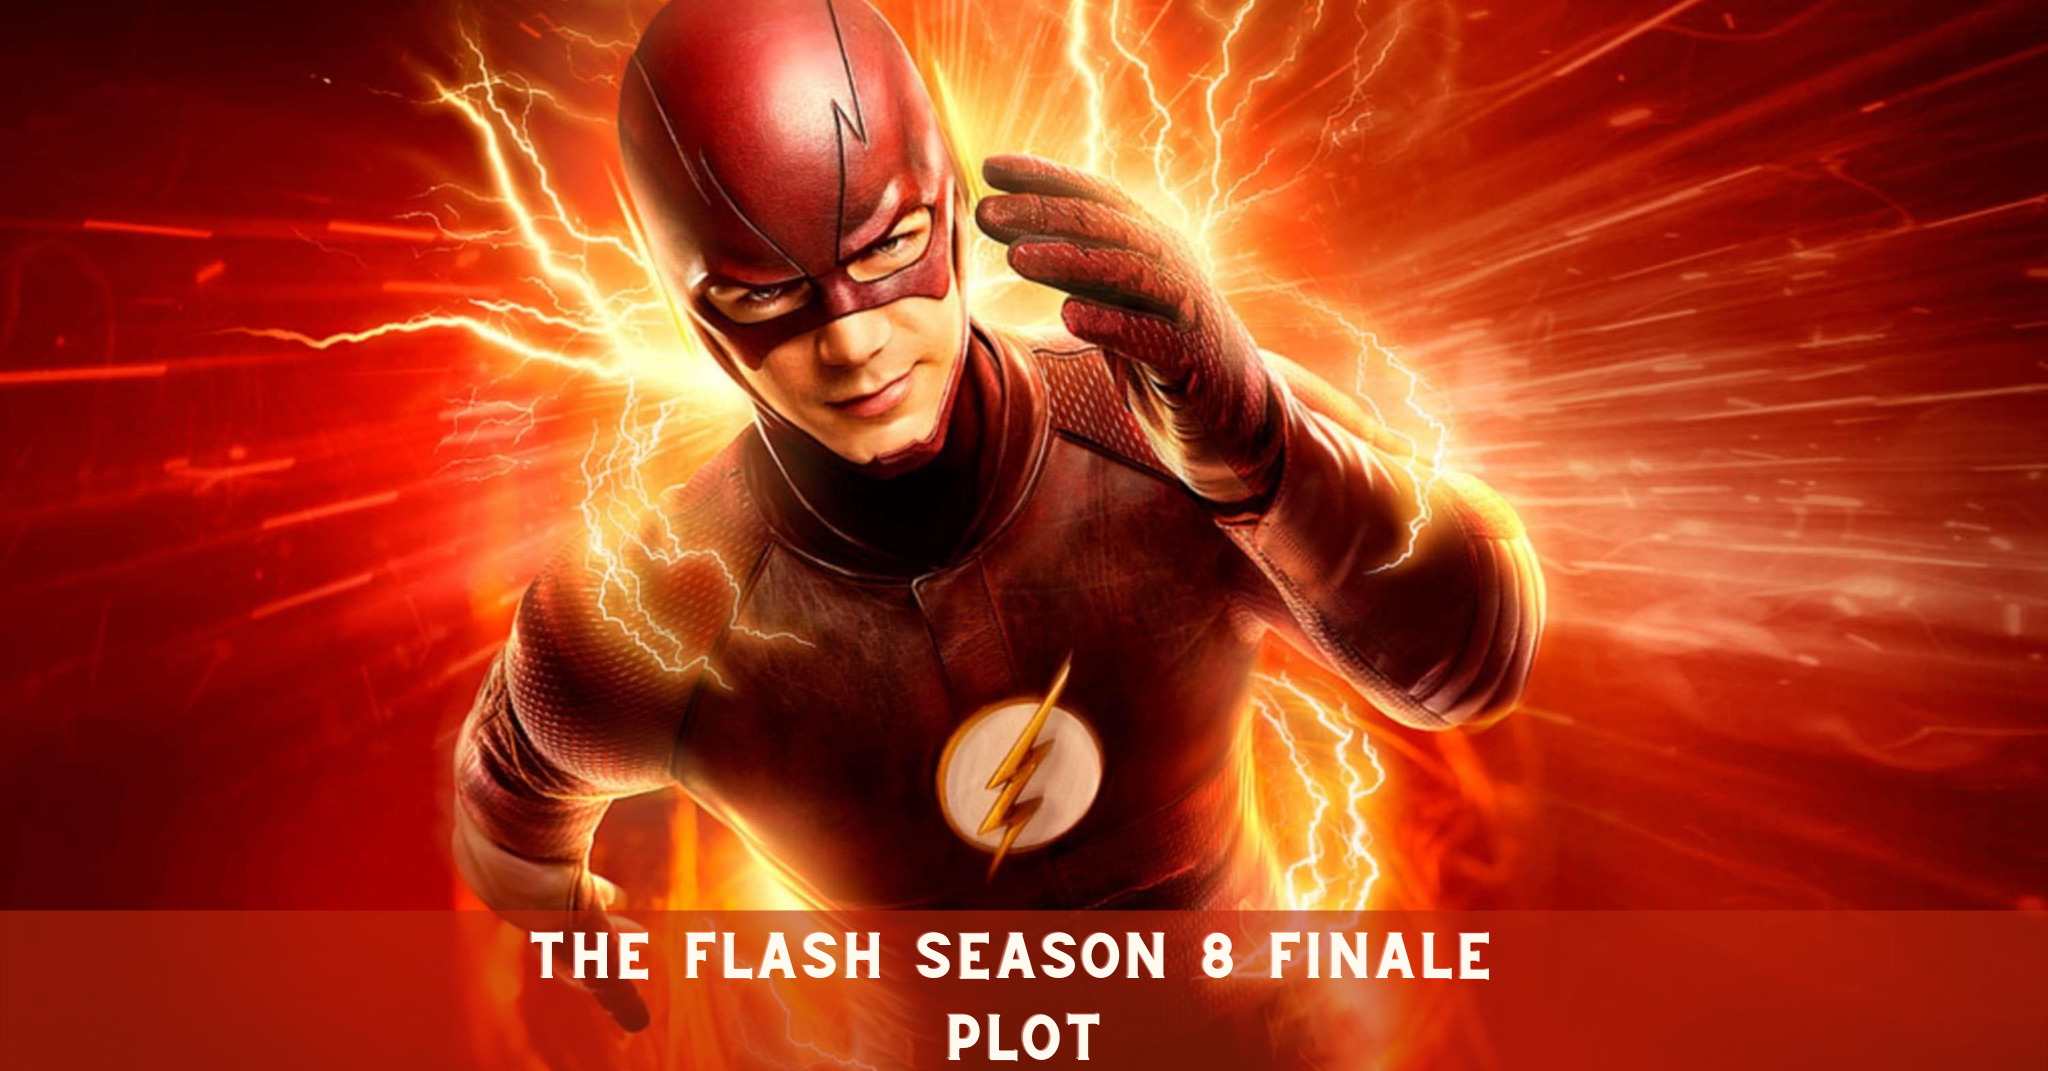 The Flash Season 8 Finale Plot